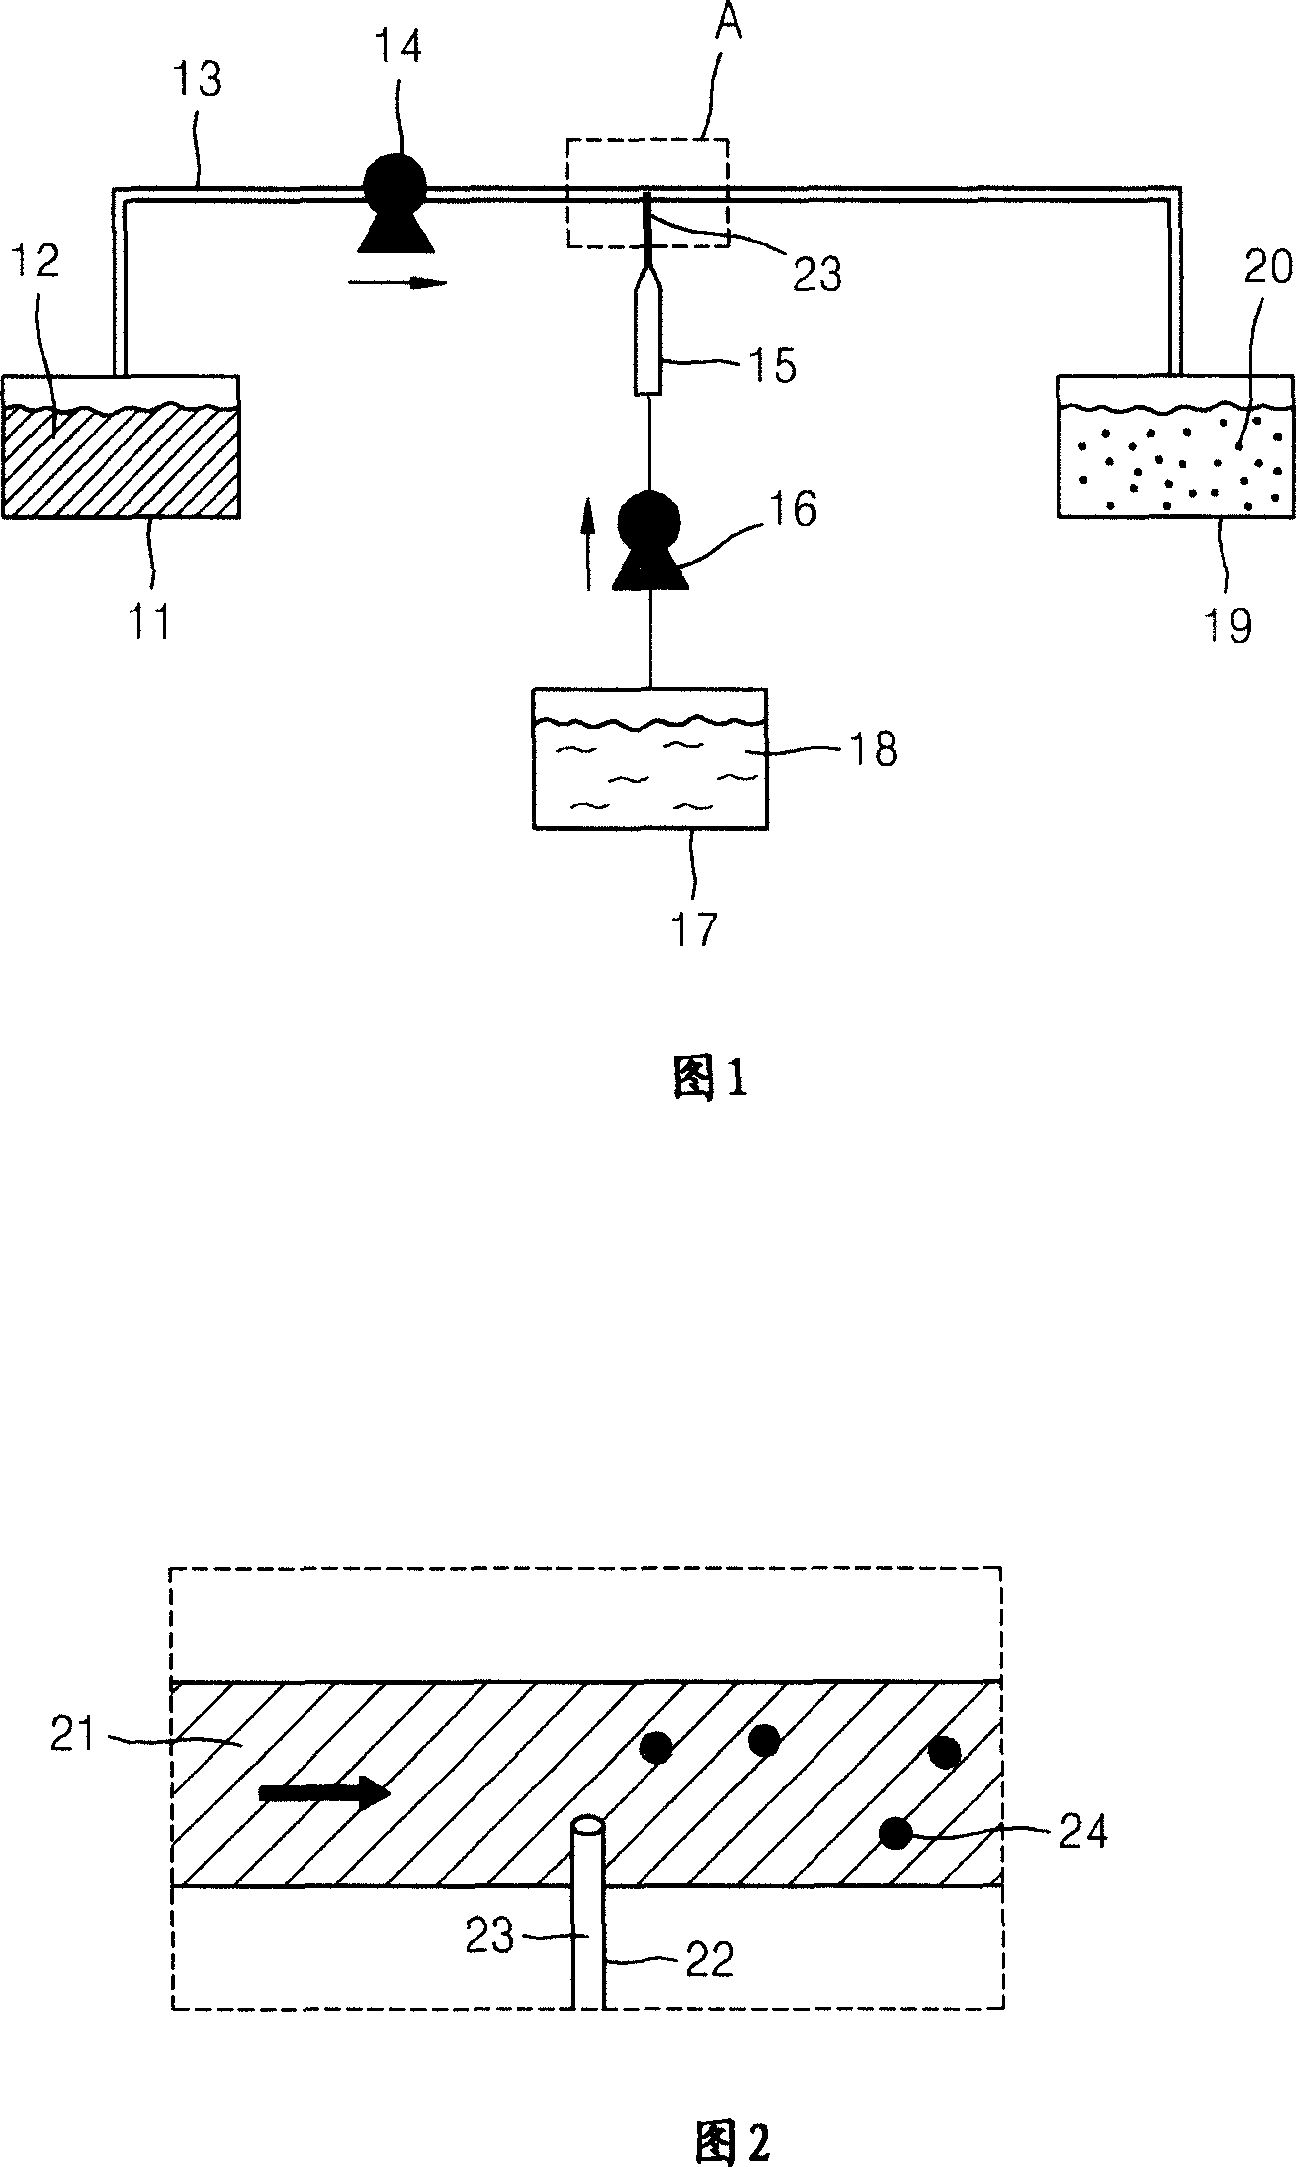 Method of preparing toner and toner prepared using the method